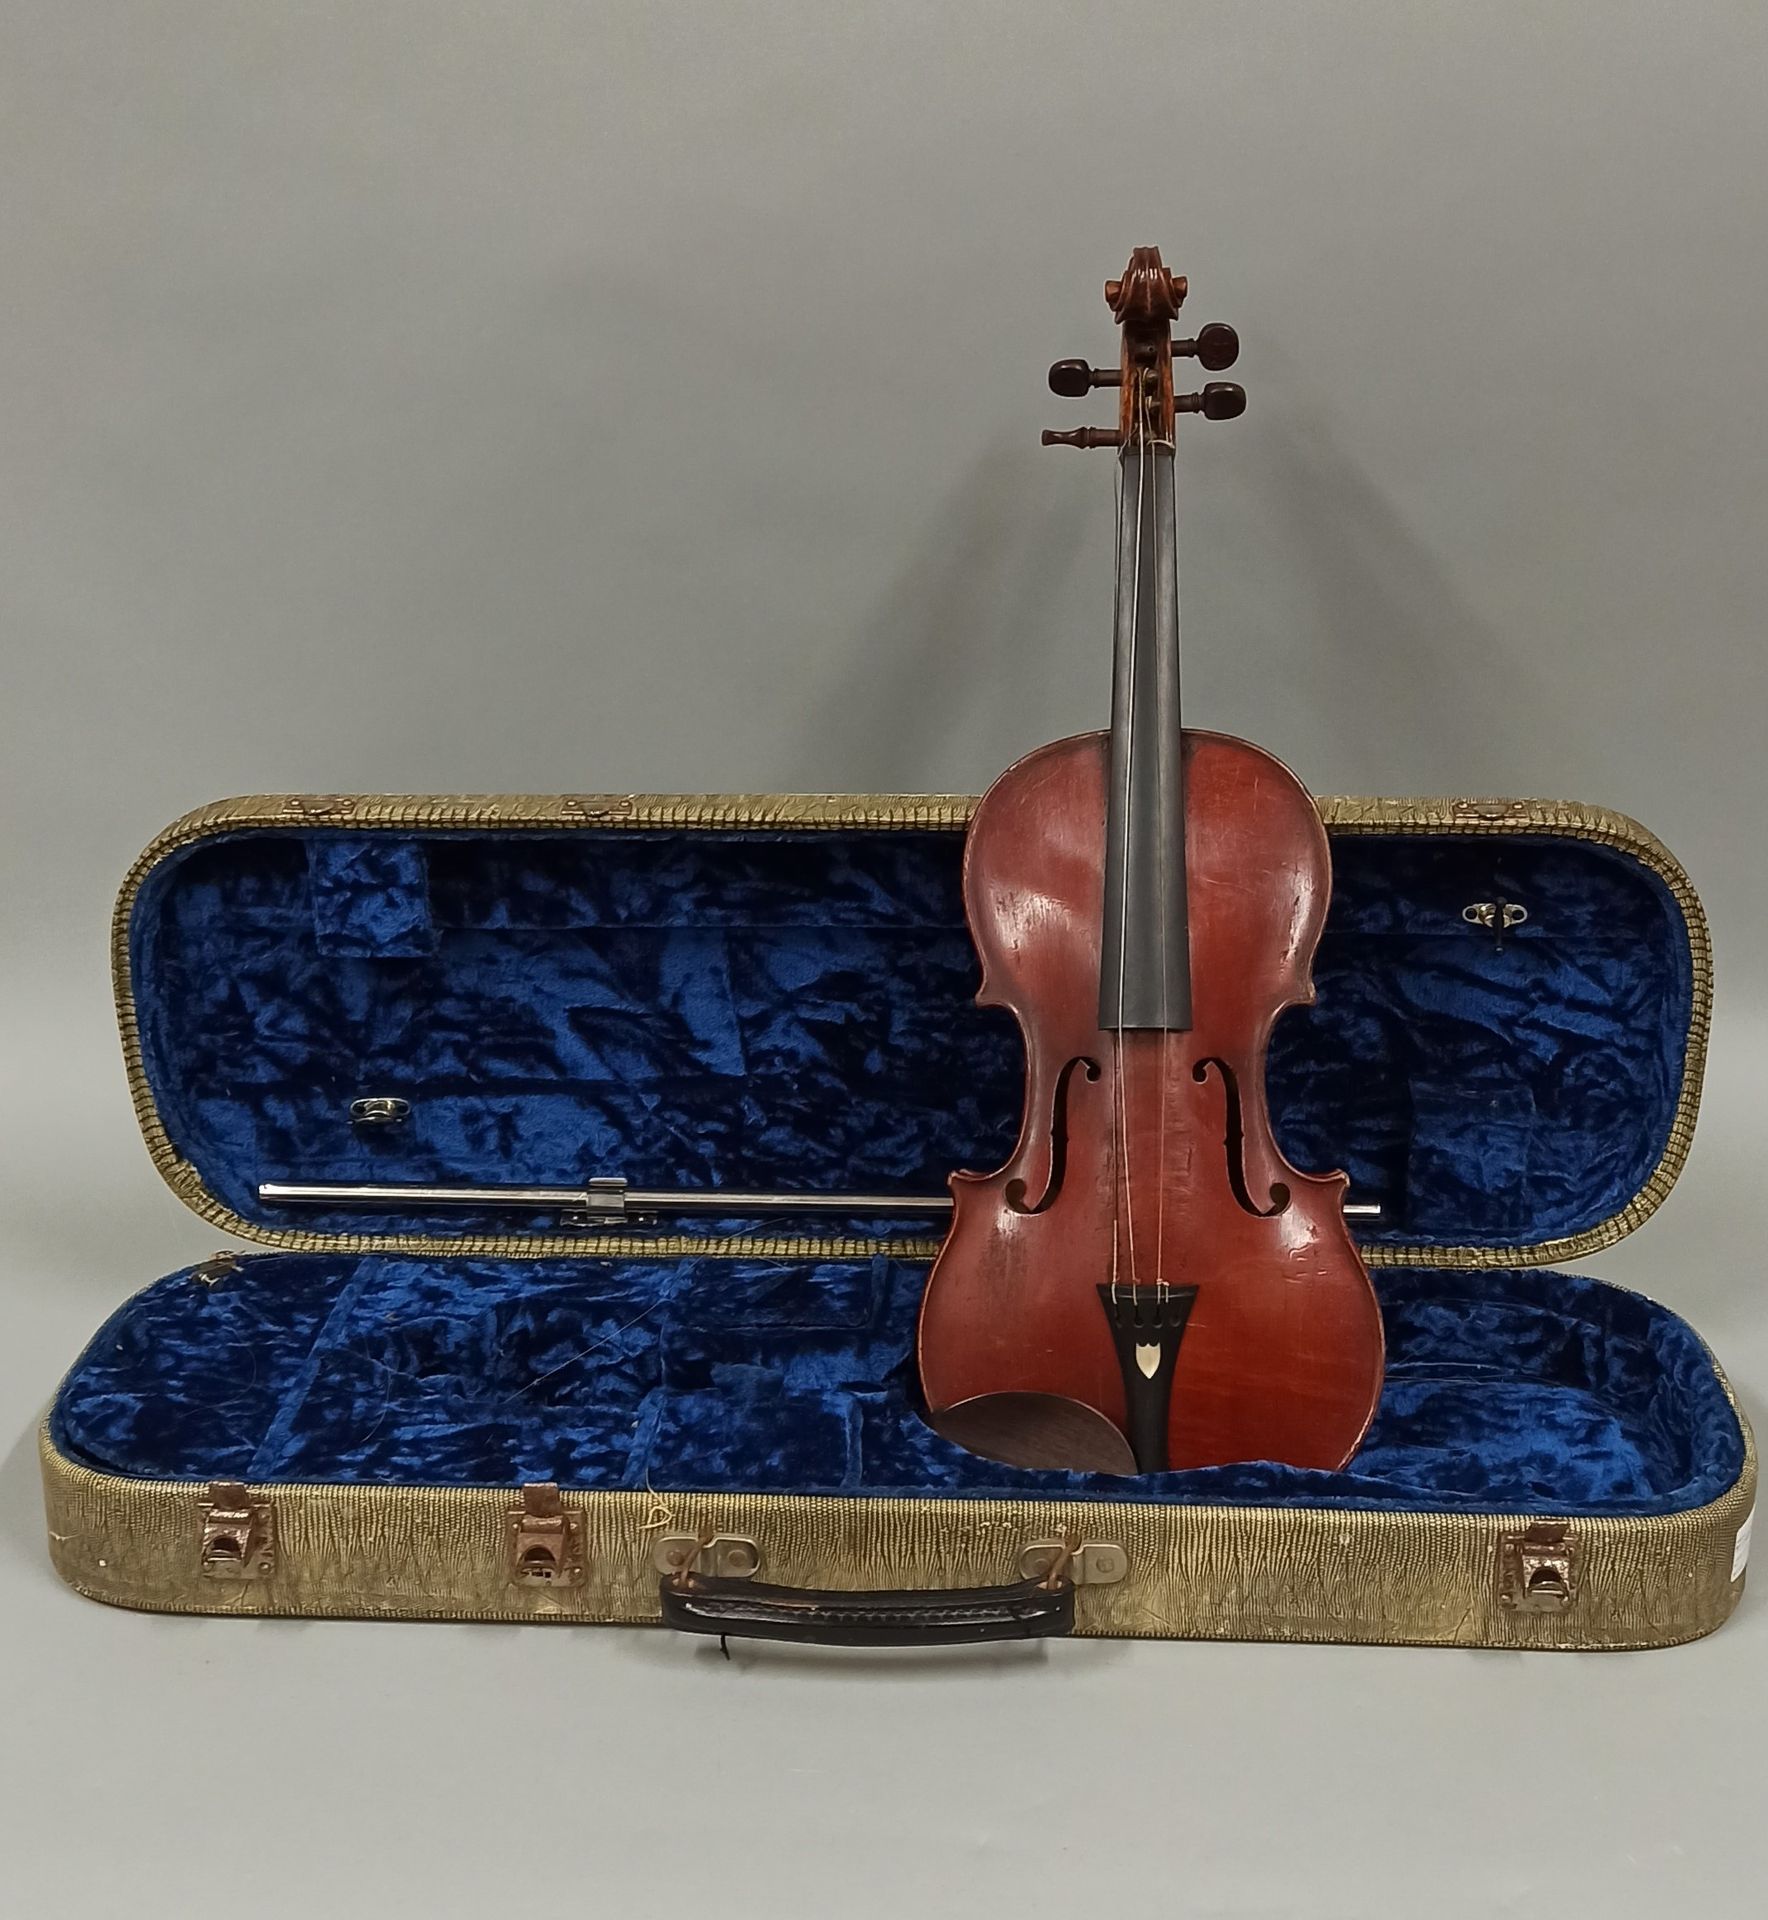 Null 雅克-巴尔贝的小提琴，制作于19世纪初

铁印 "J.BARBE PERE"。

368毫米。另一个制造者的头。

各种事故和虫子的踪迹。